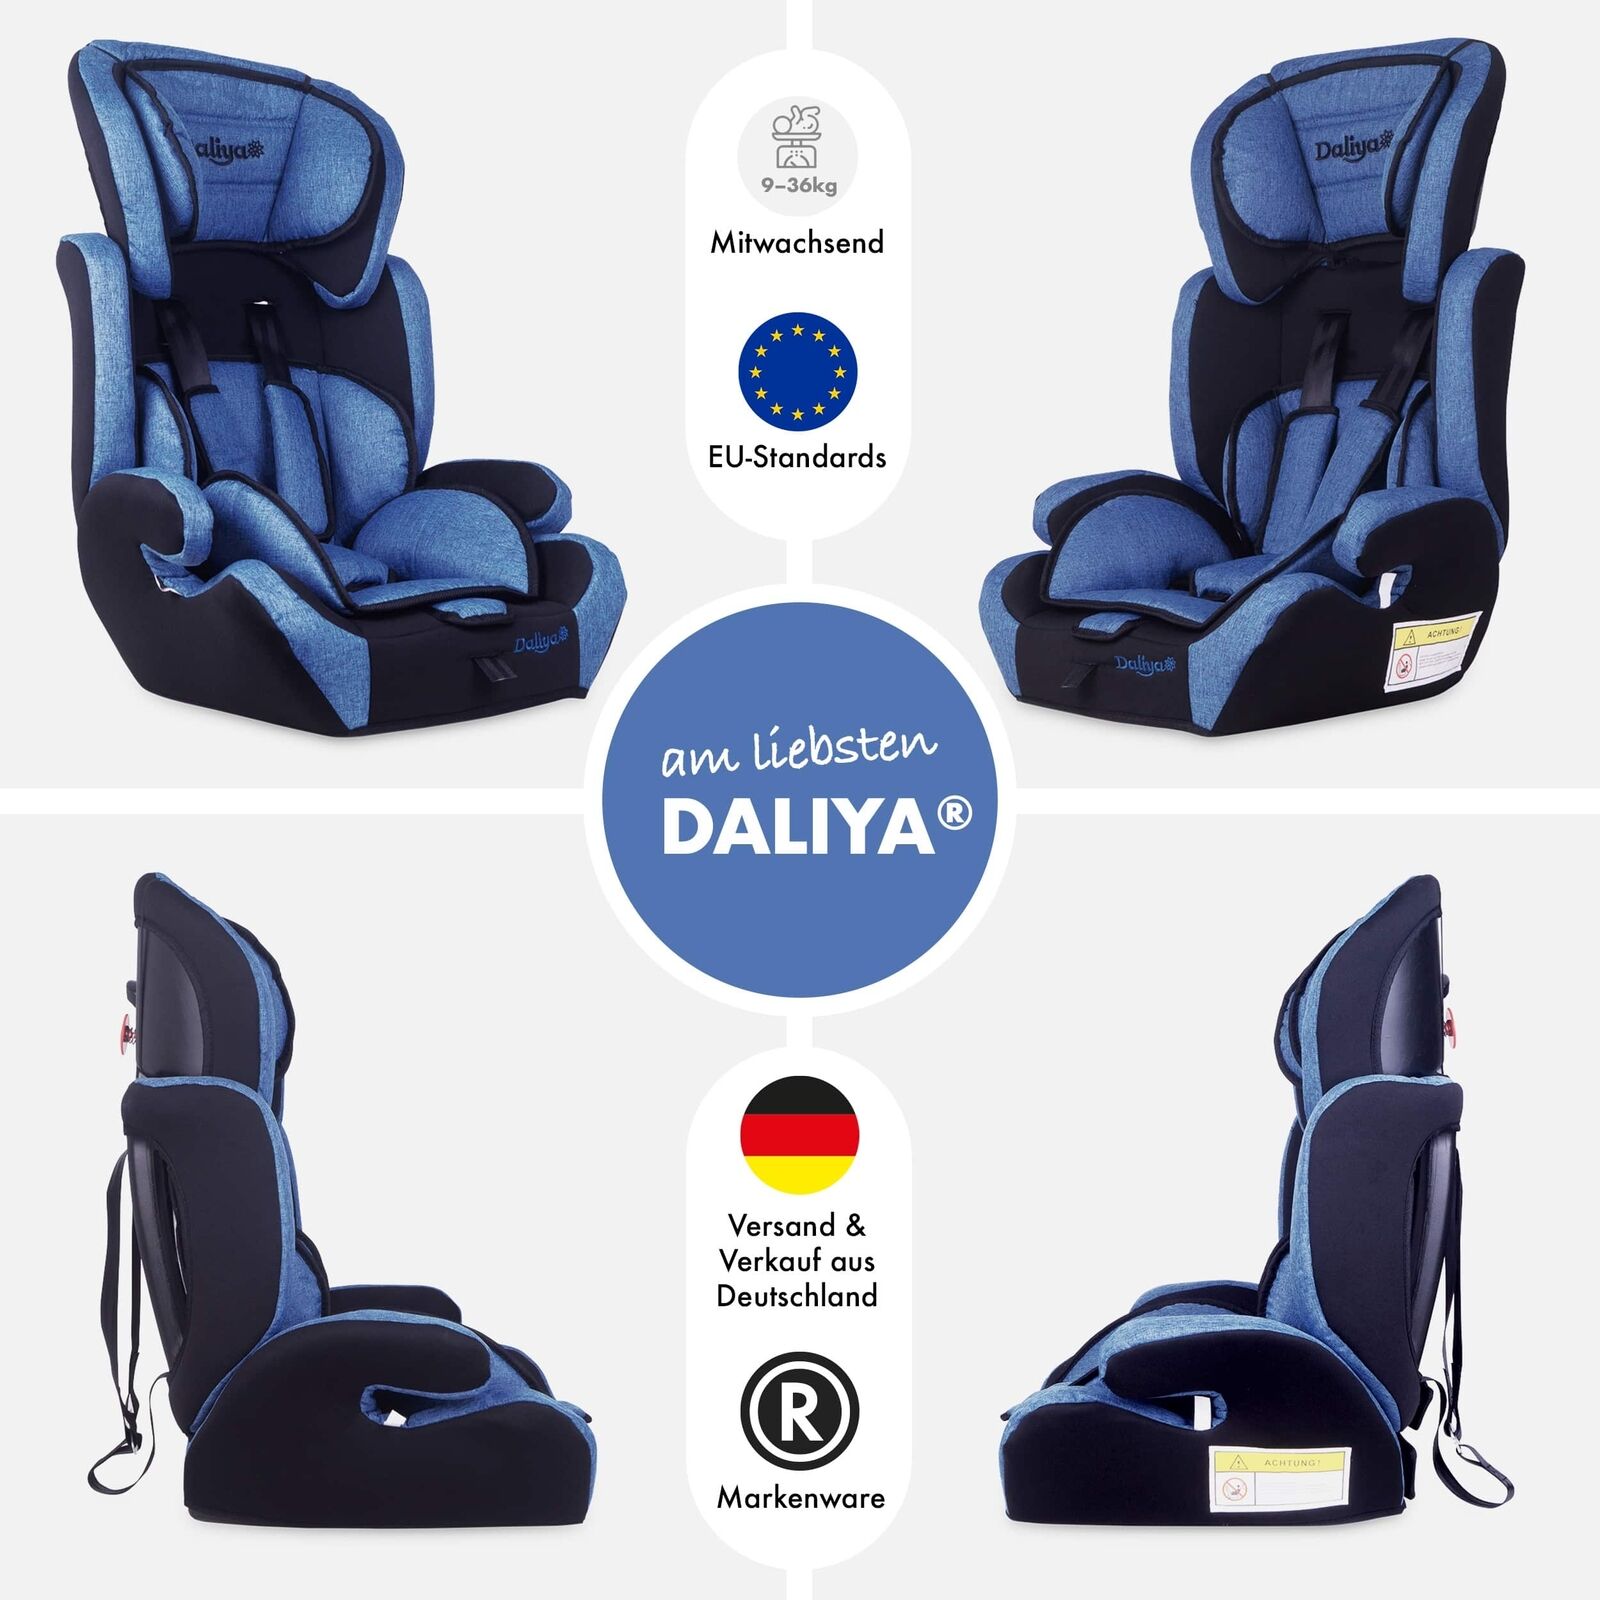 Daliya Autokindersitz Autositz Kinderautositz Extrapolster 9-36kg Gruppe 123